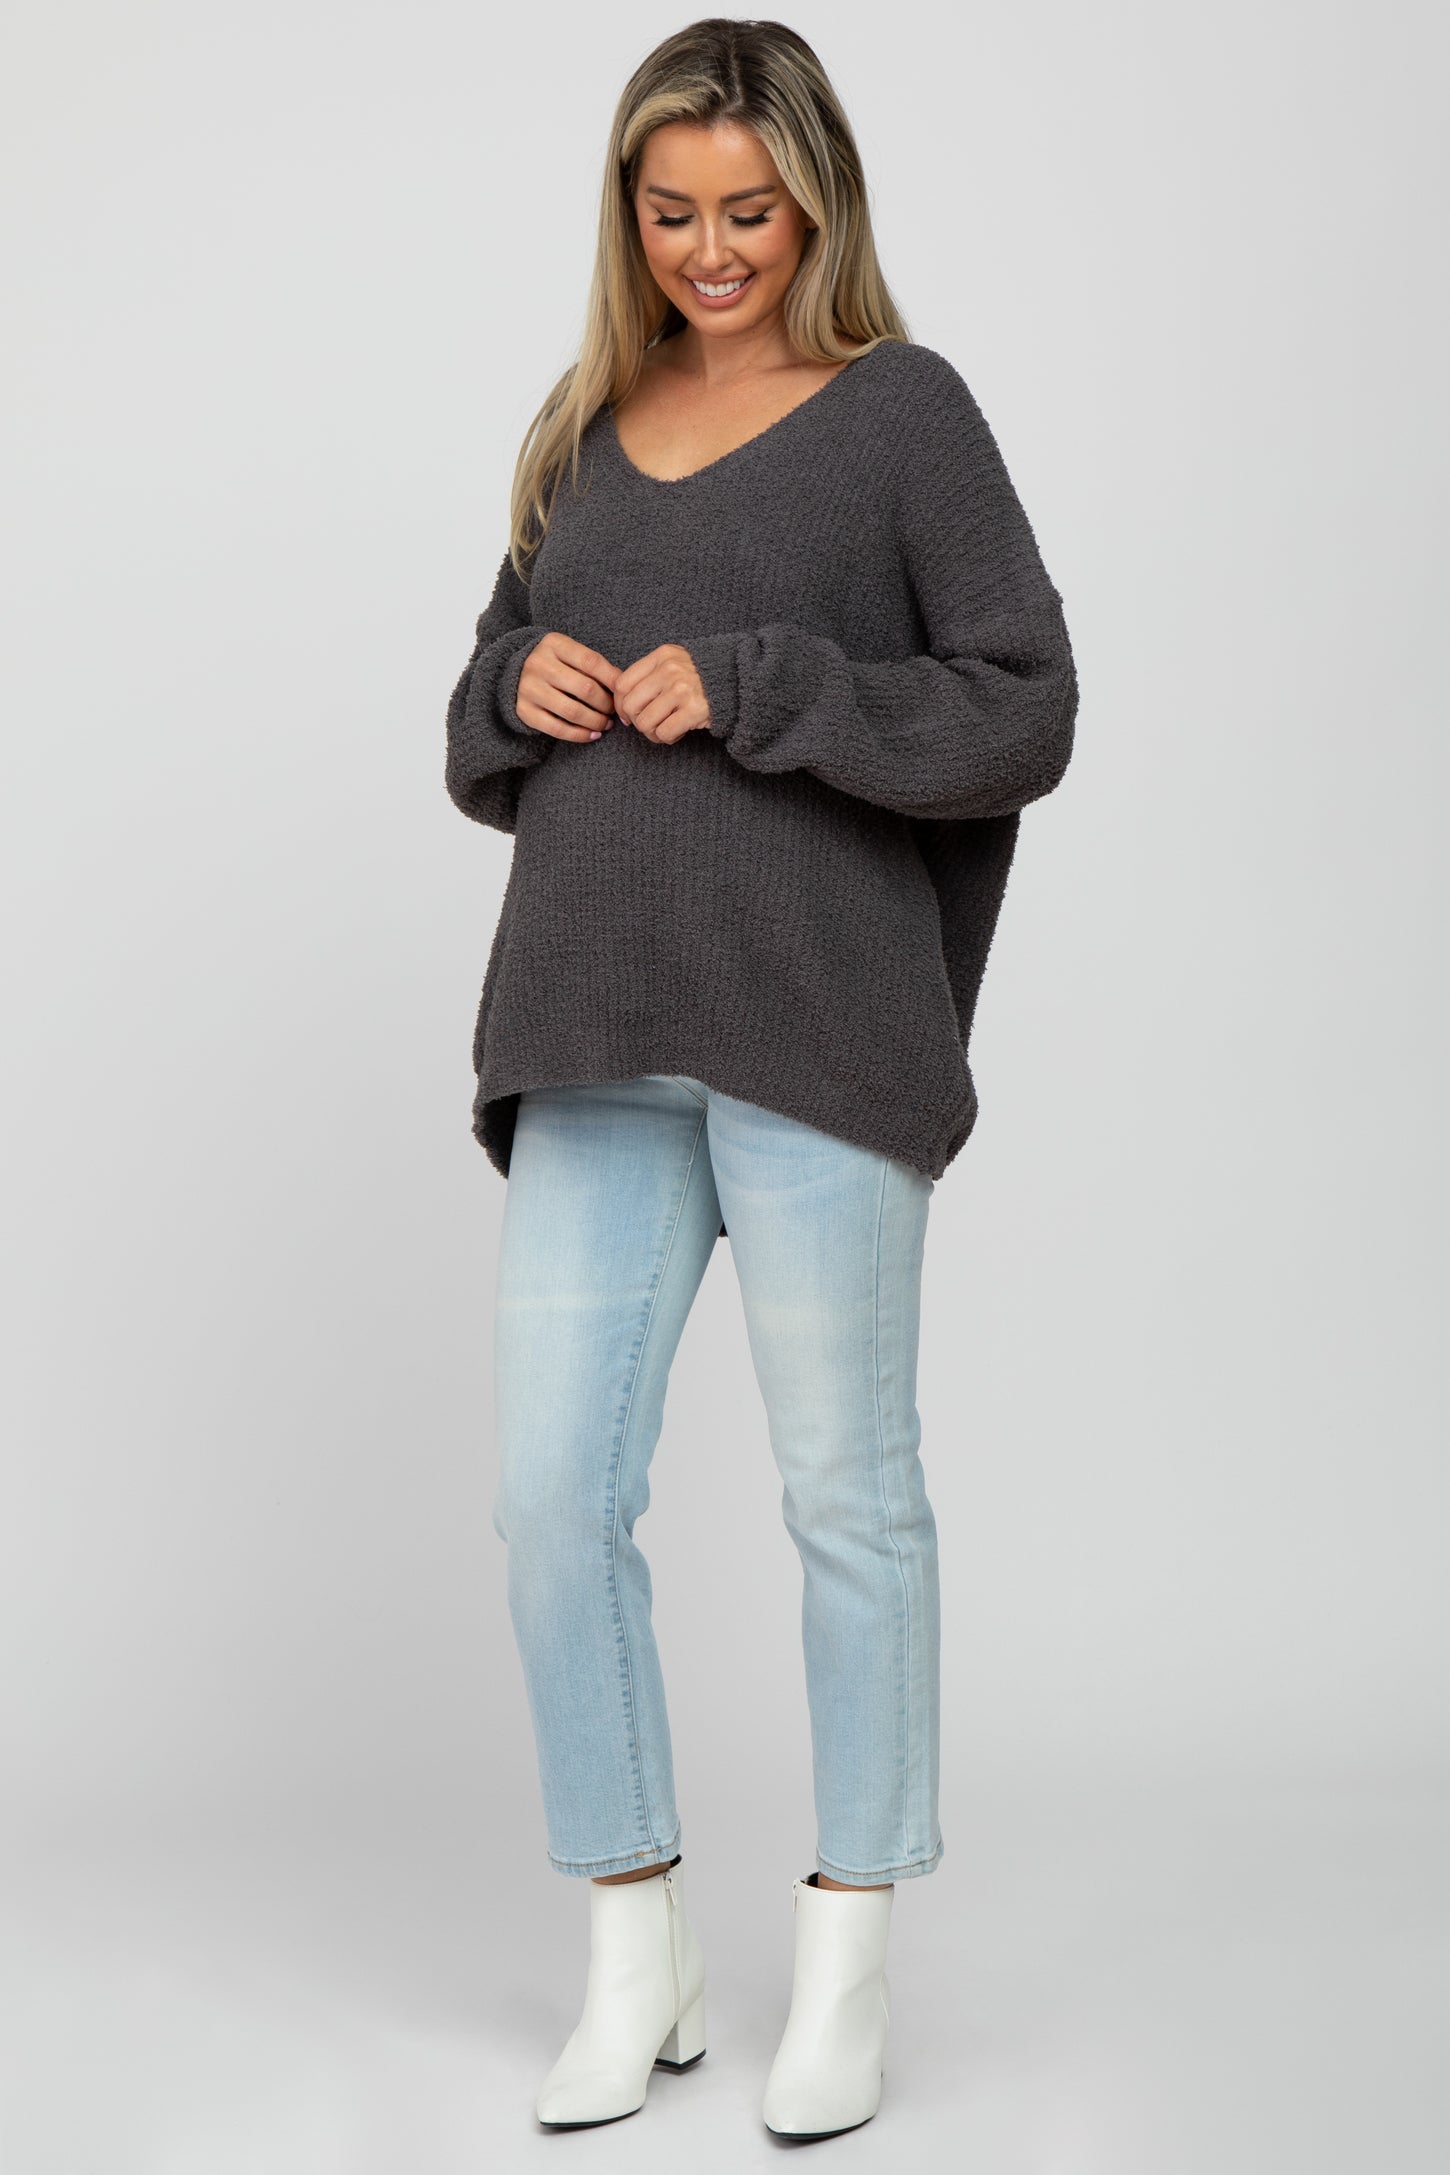 Charcoal V-Neck Soft Maternity Sweater